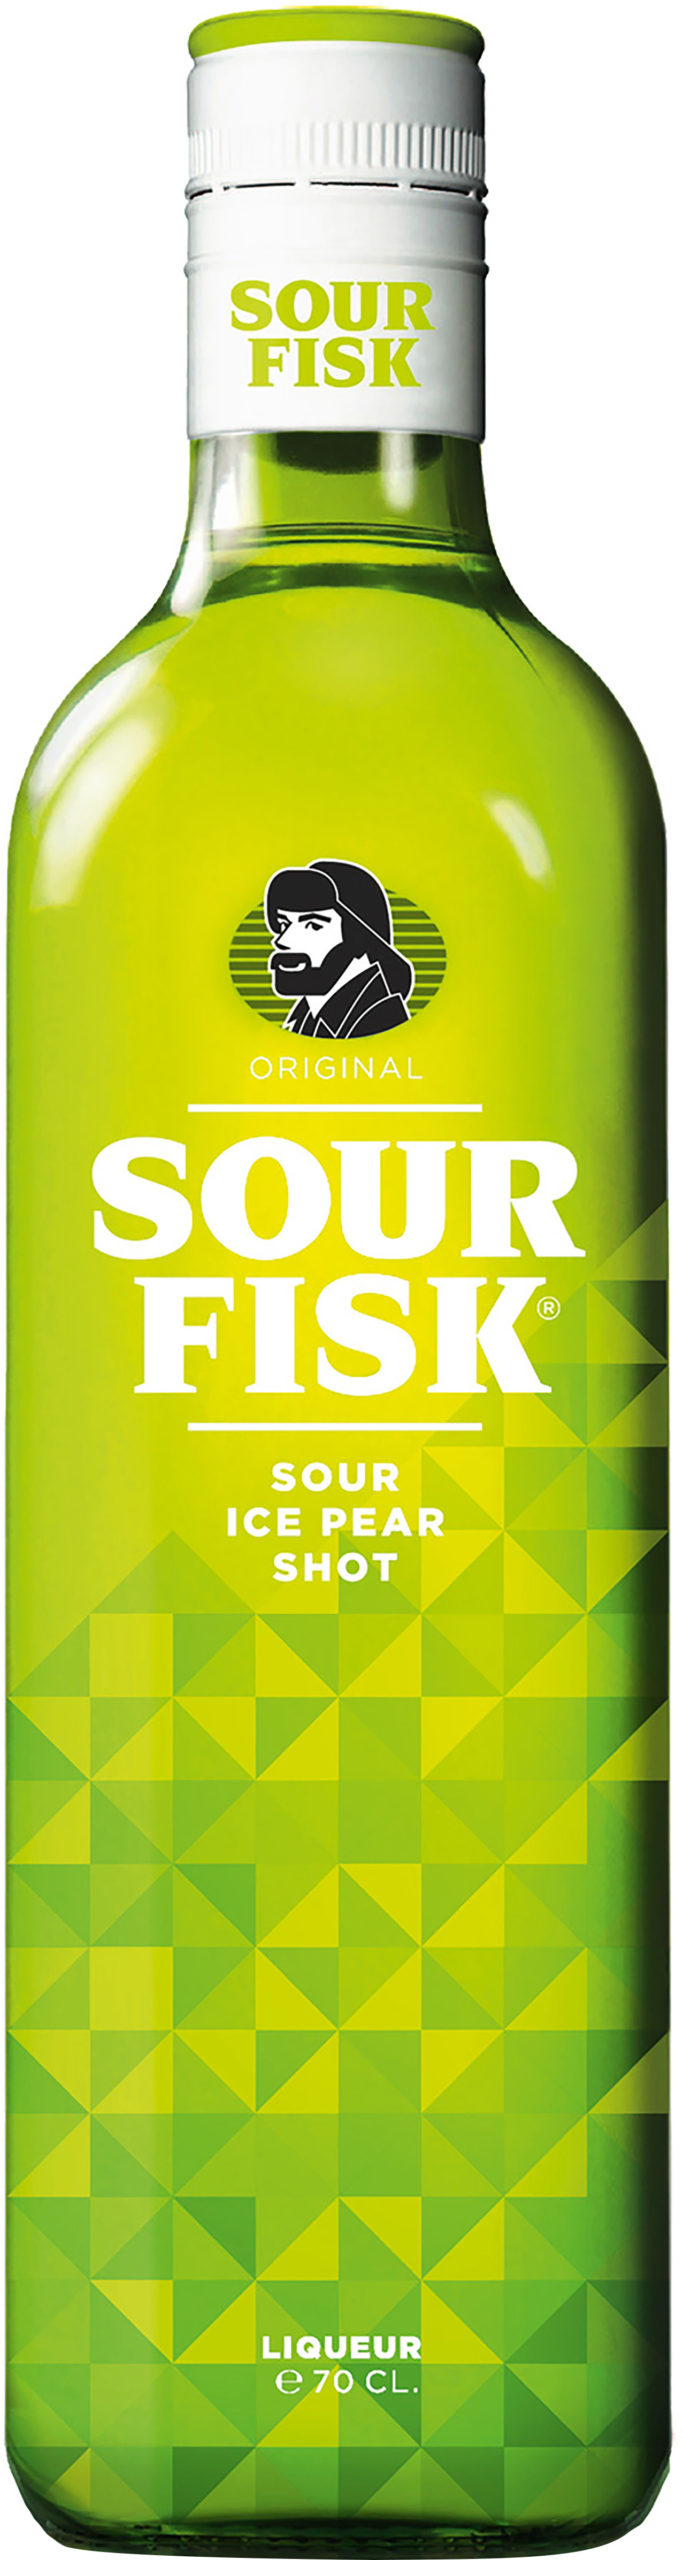 Sour Fisk Sour Ice Pear